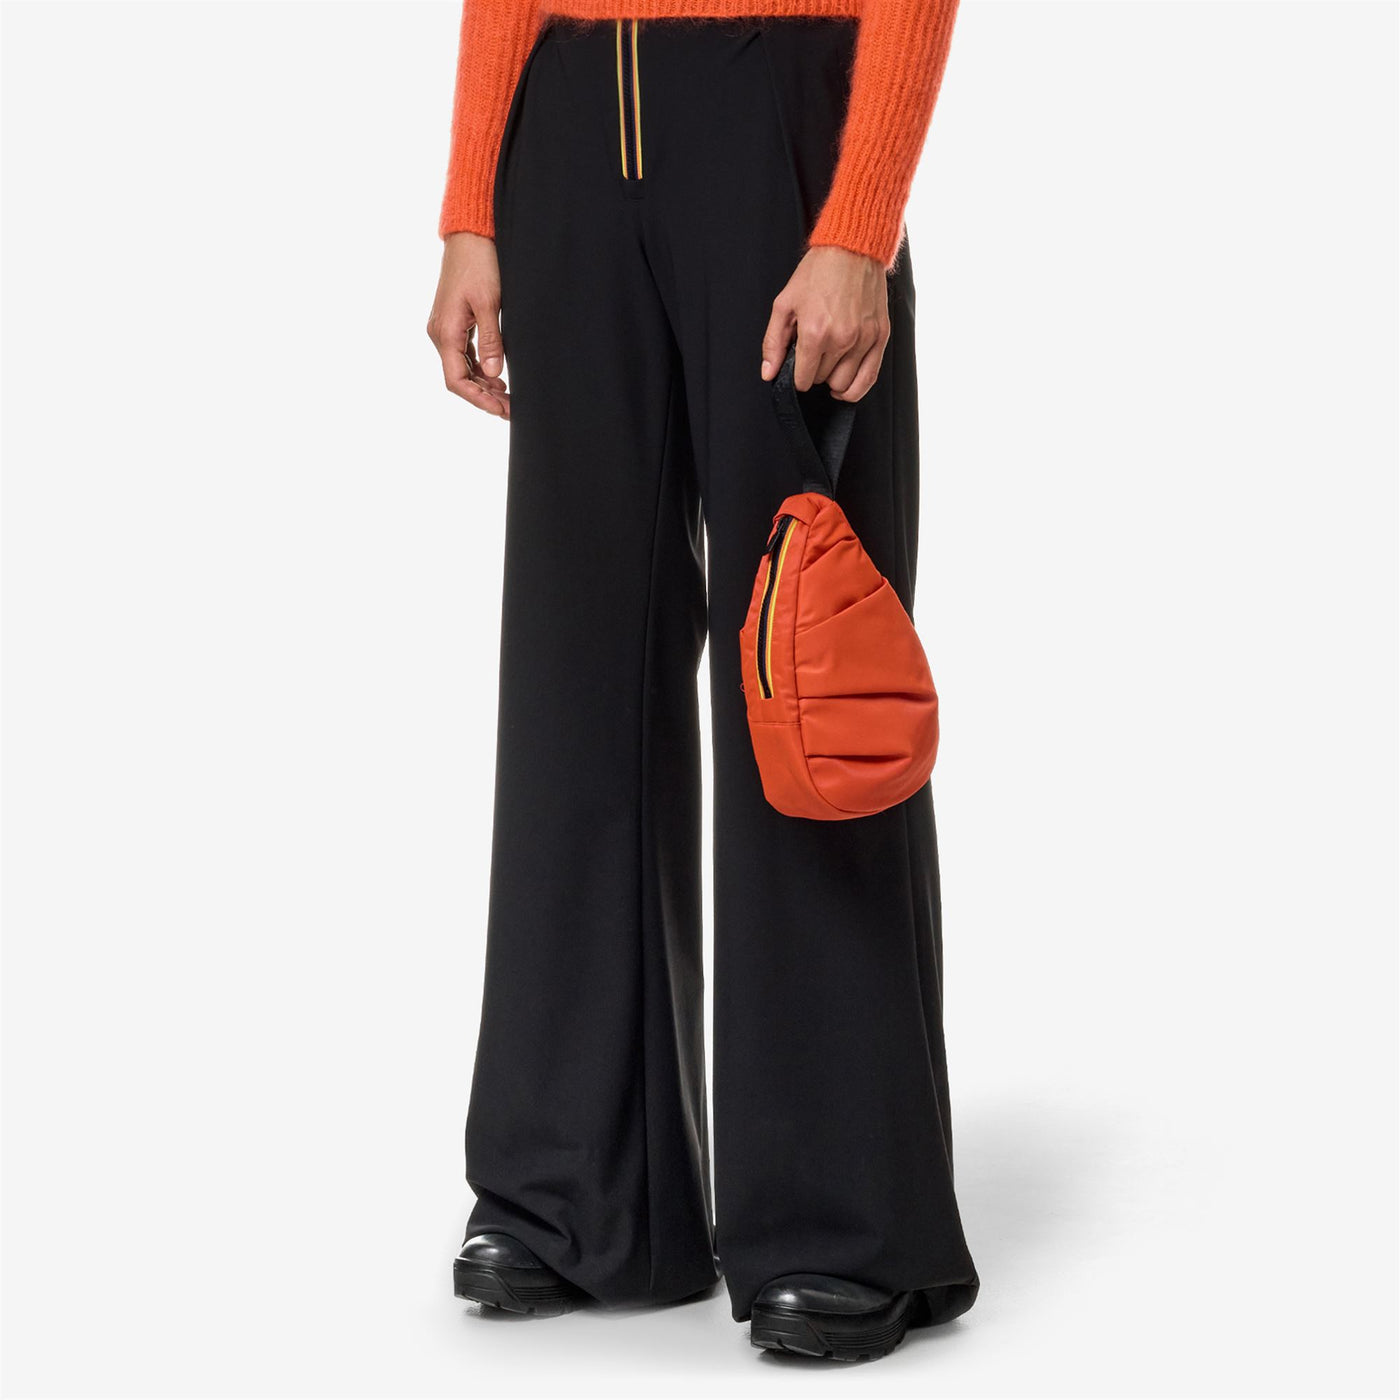 Bags Unisex ROQUE SHINY TWILL Pouch Bag ORANGE PUMPKIN Dressed Back (jpg Rgb)		